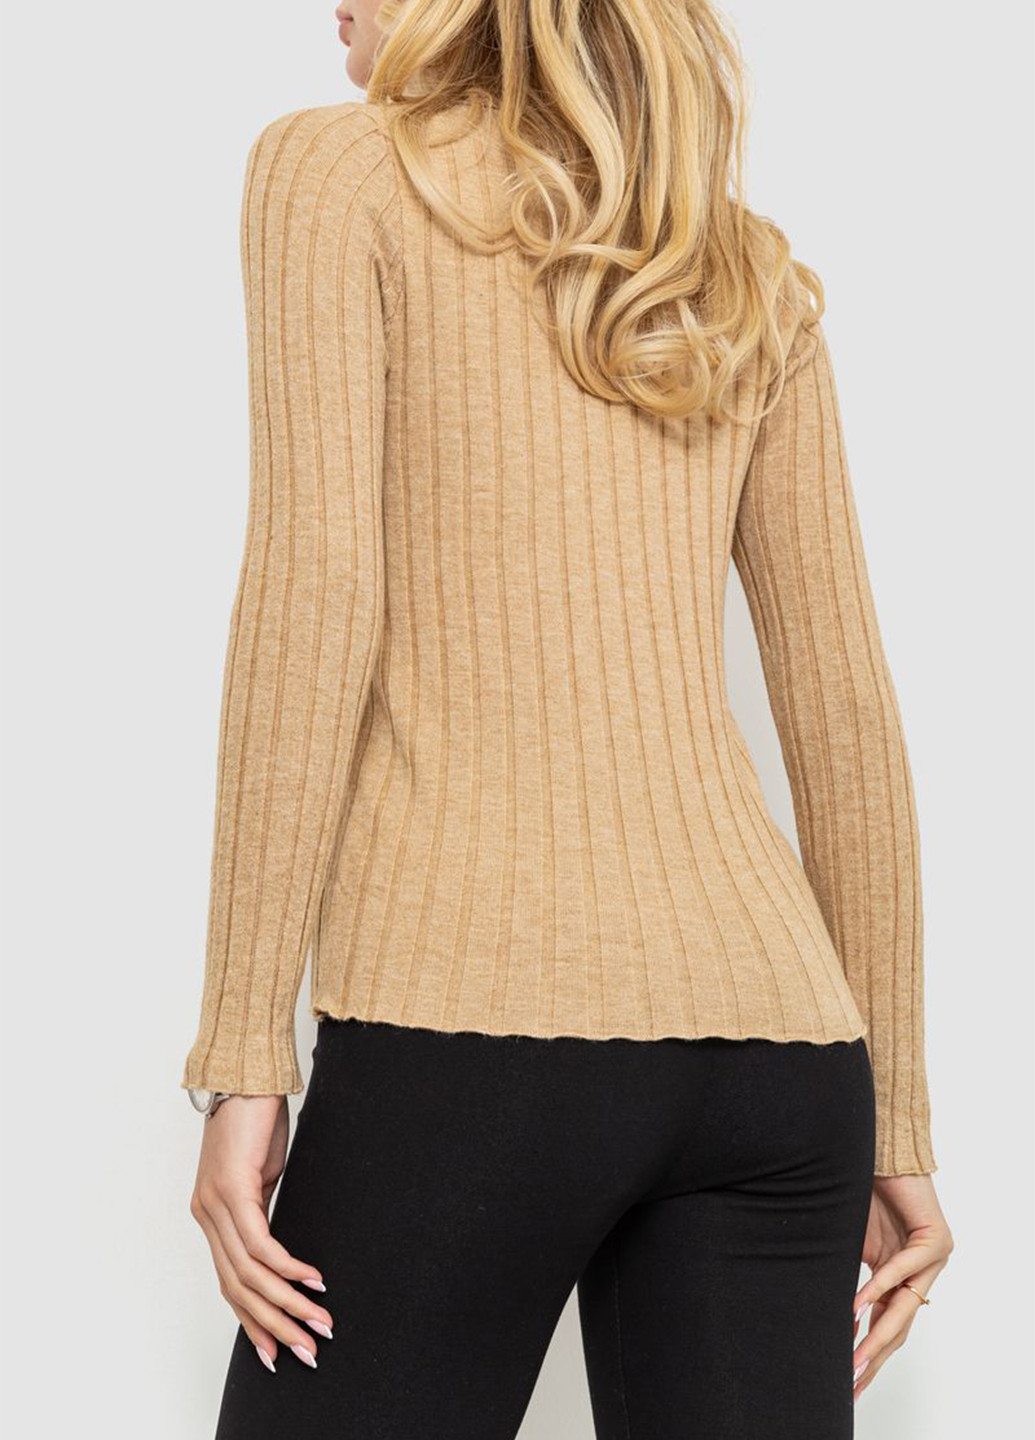 Бежевый демисезонный пуловер пуловер Ager